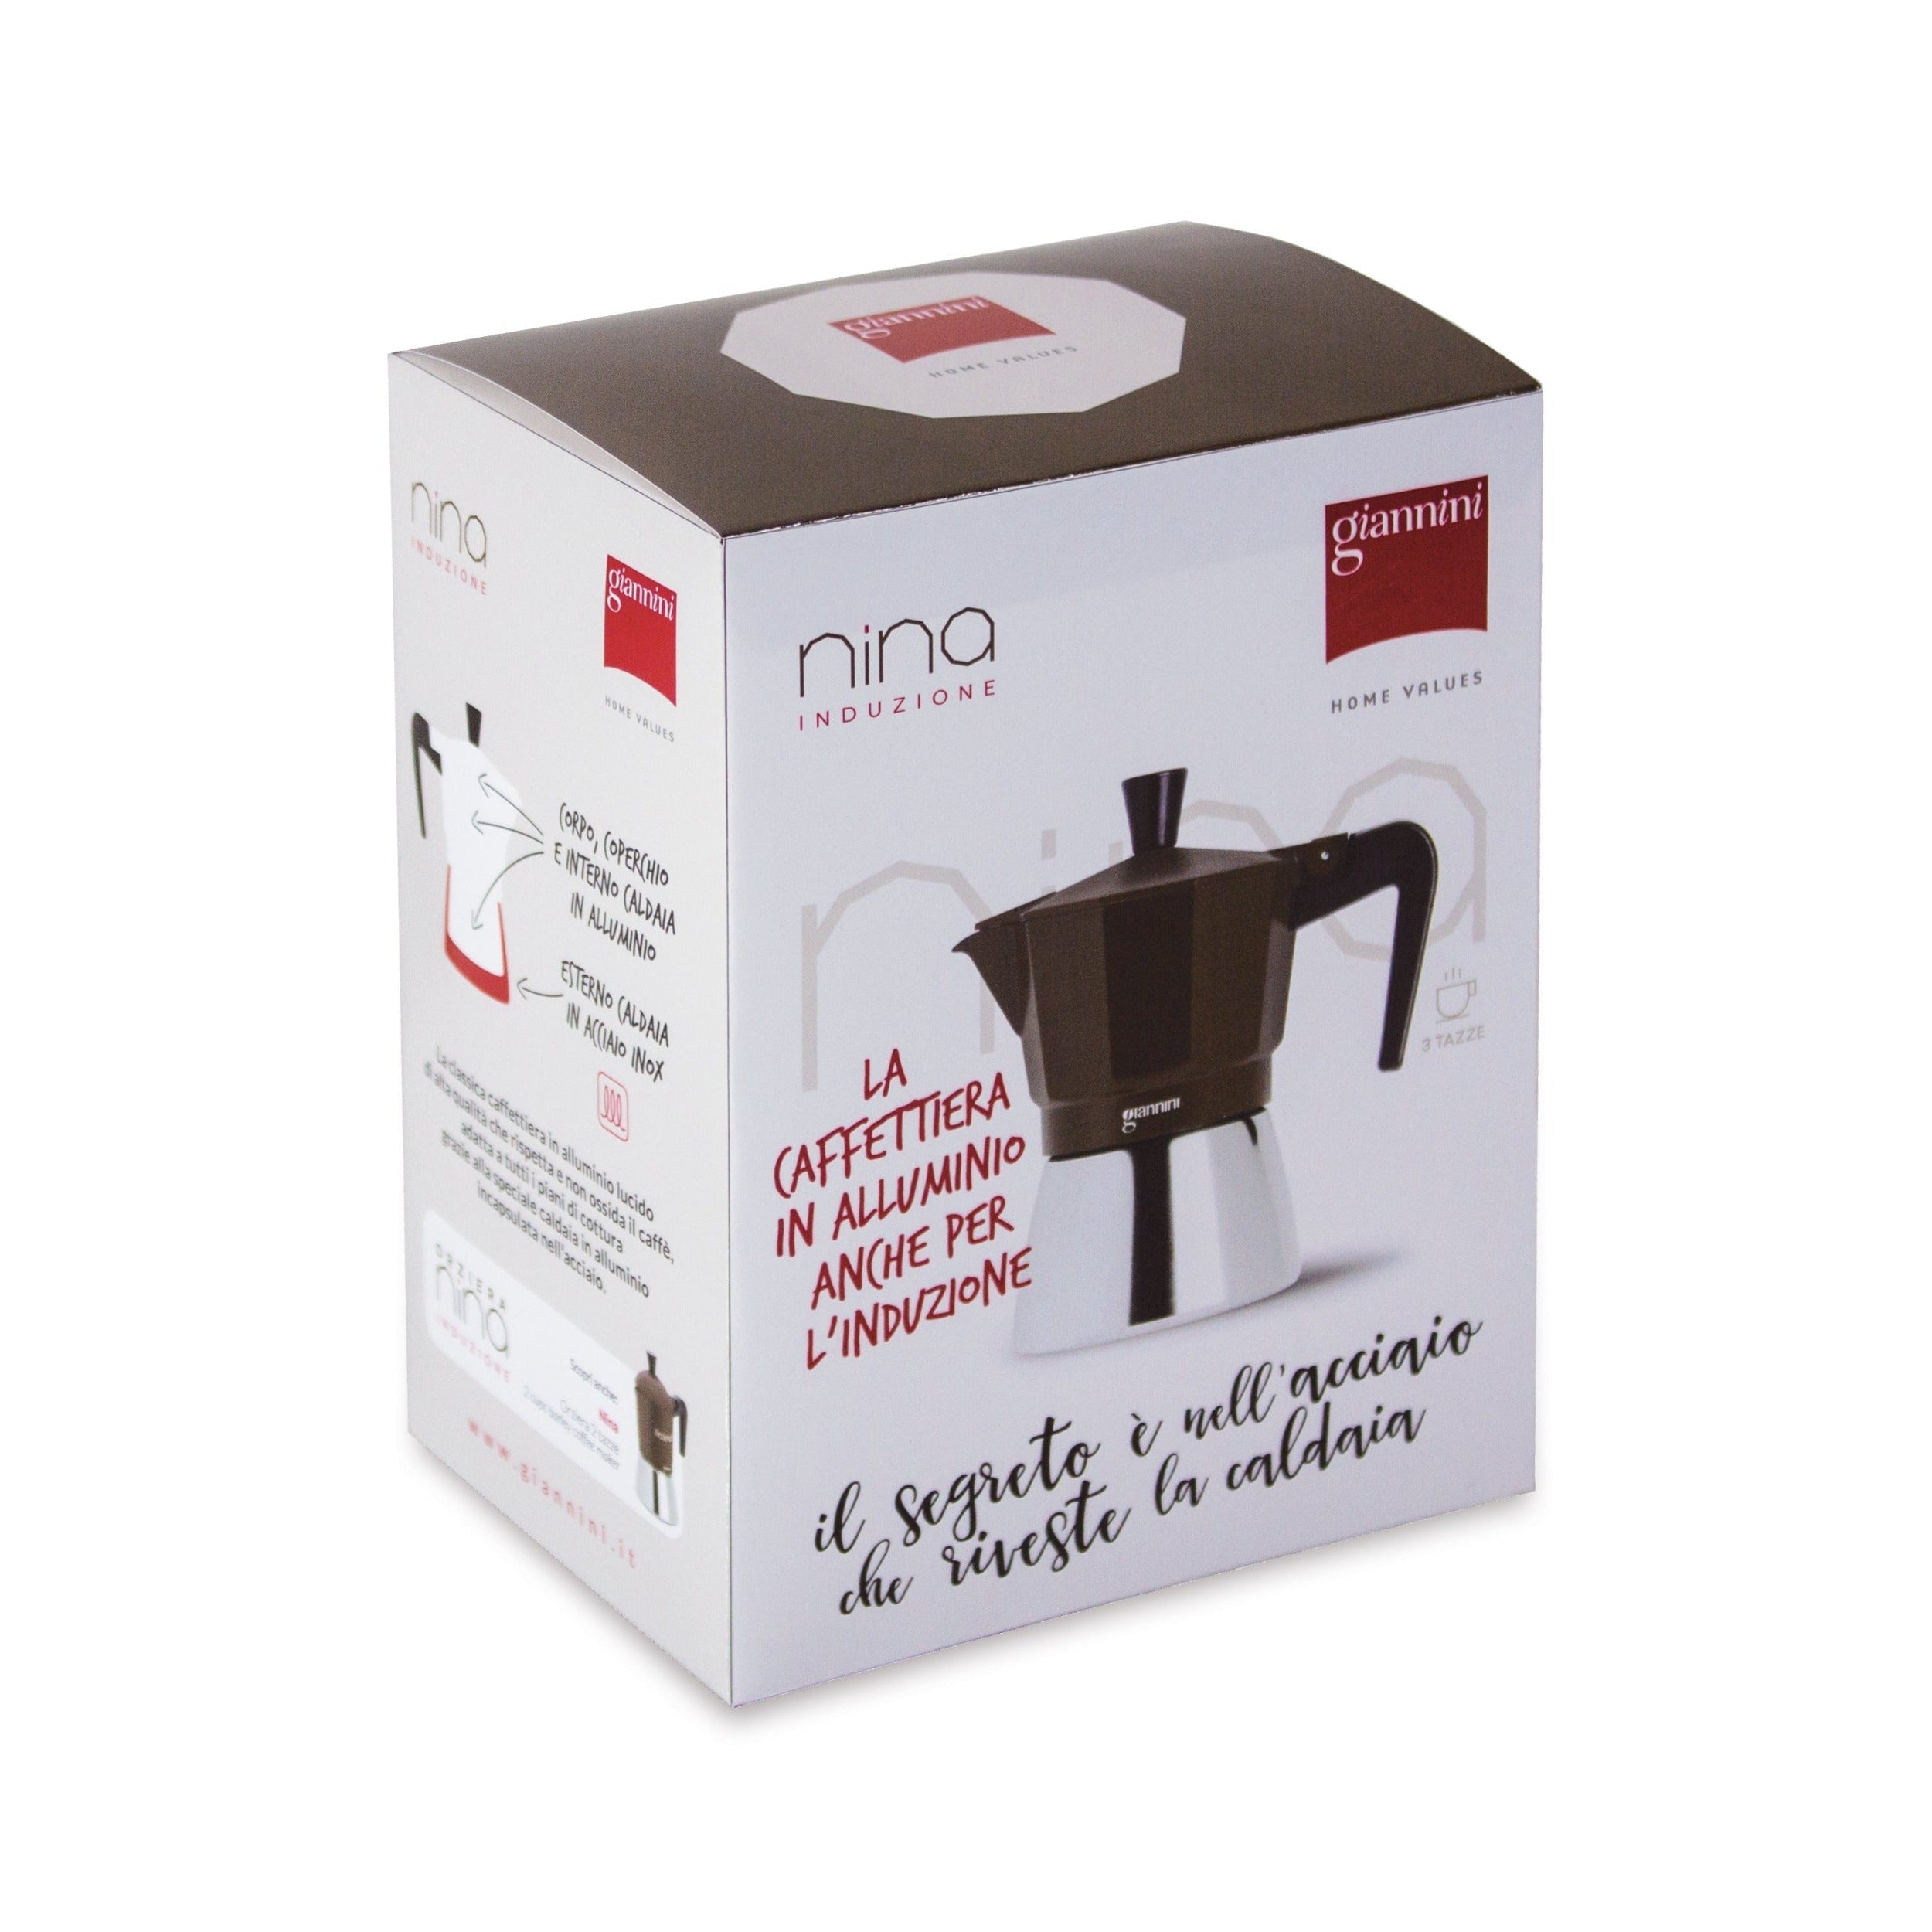 Giannini Nina Induction 3 Cup Espresso Maker Box